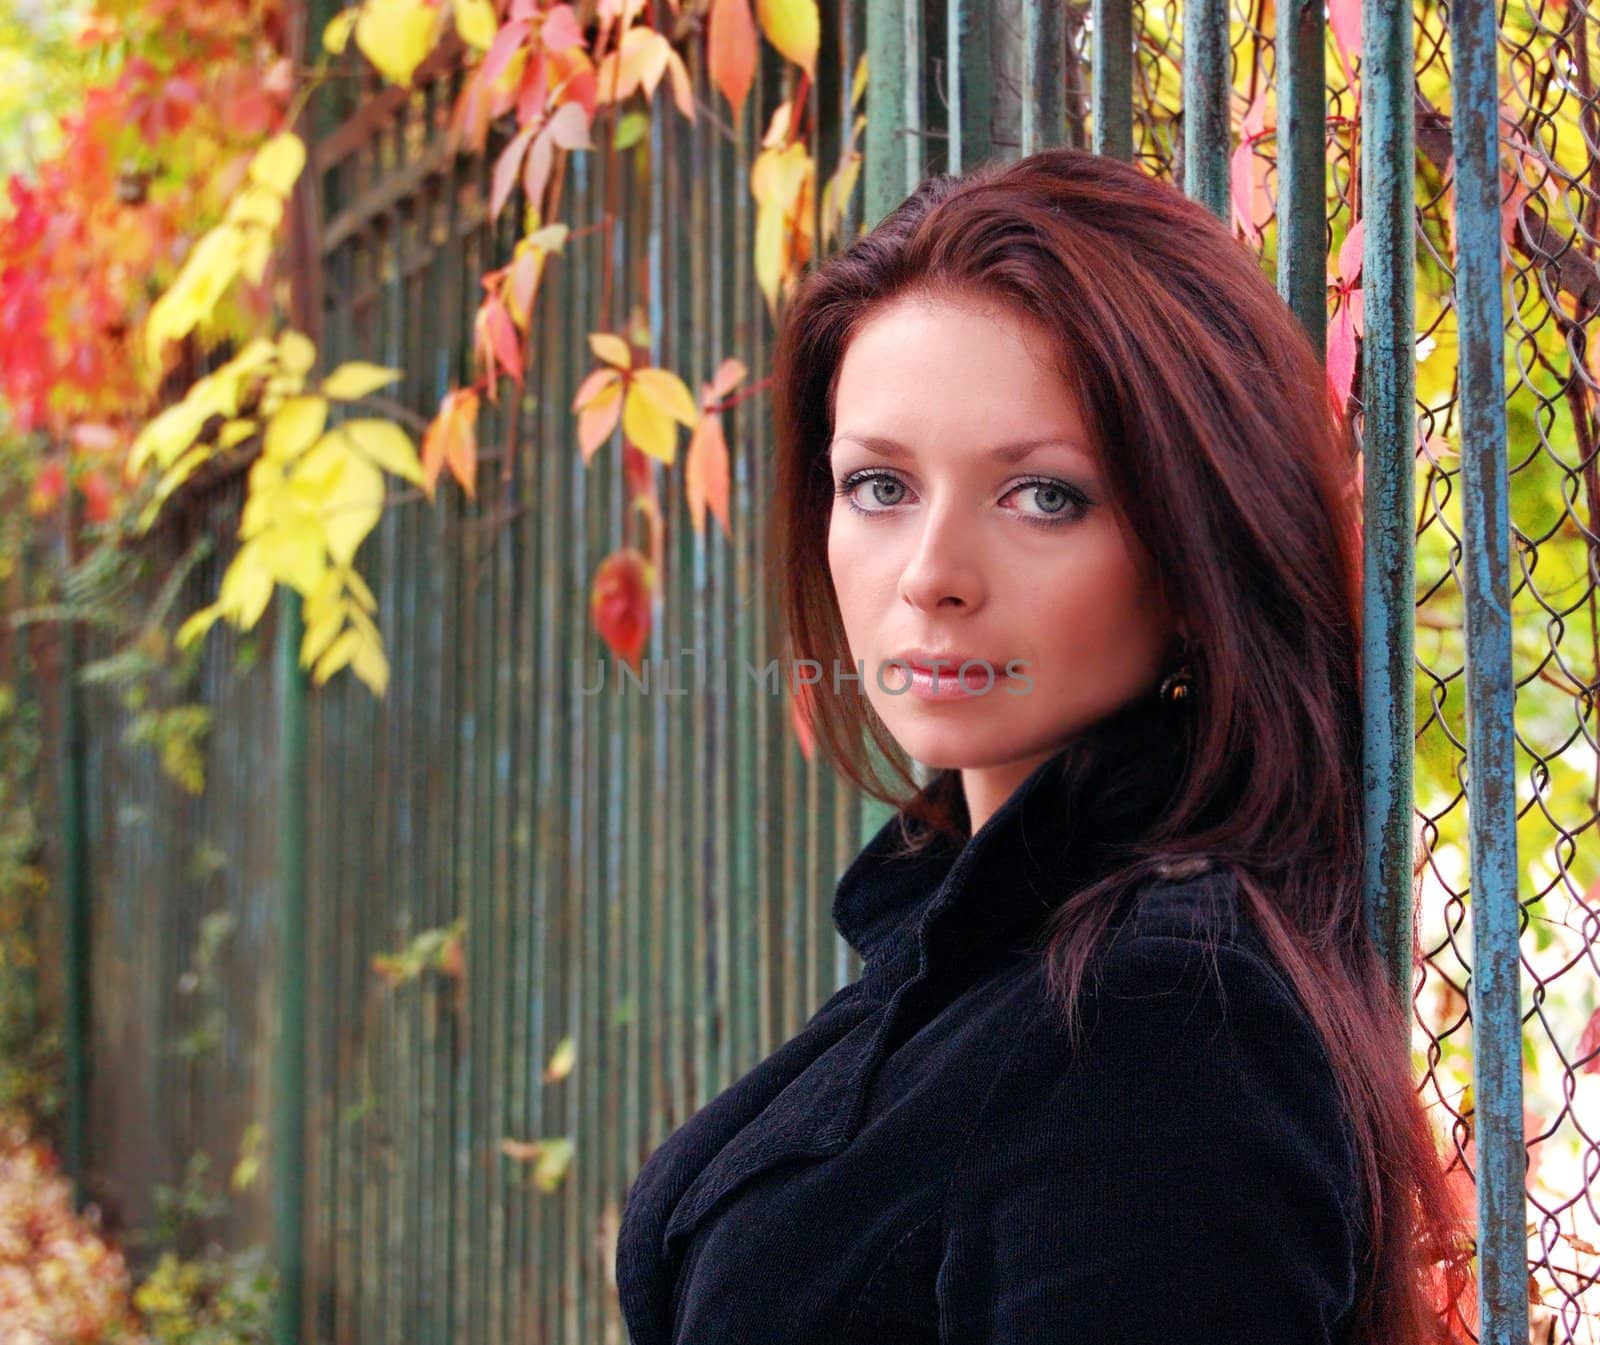 Beautiful autumn portrait of brunette woman standing near fence